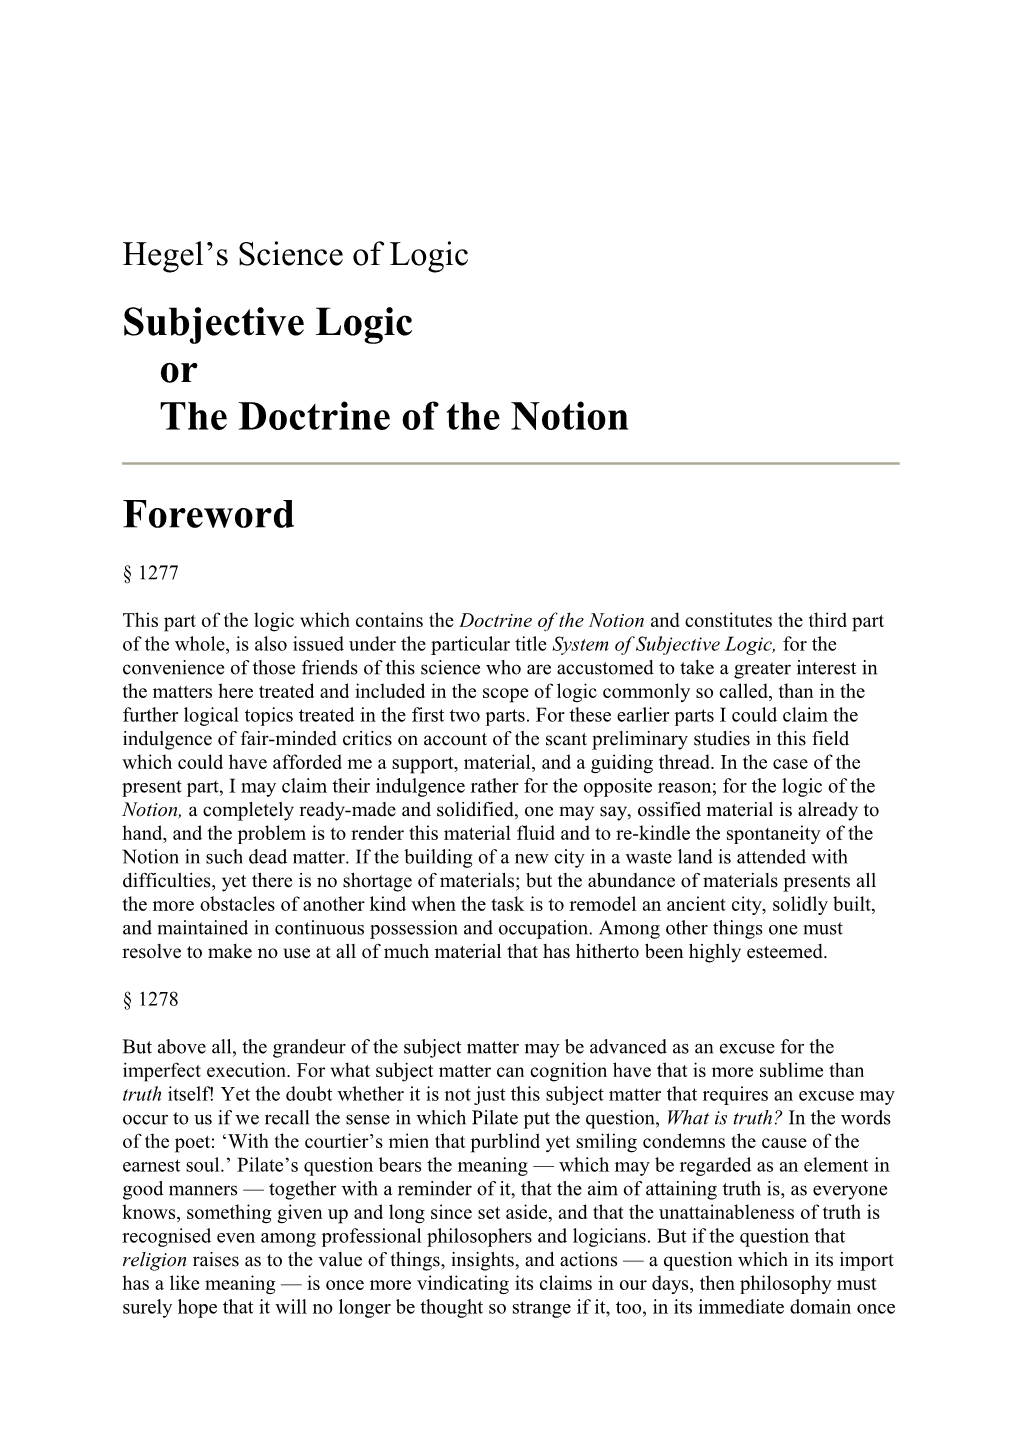 Subjective Logicorthe Doctrine of the Notion